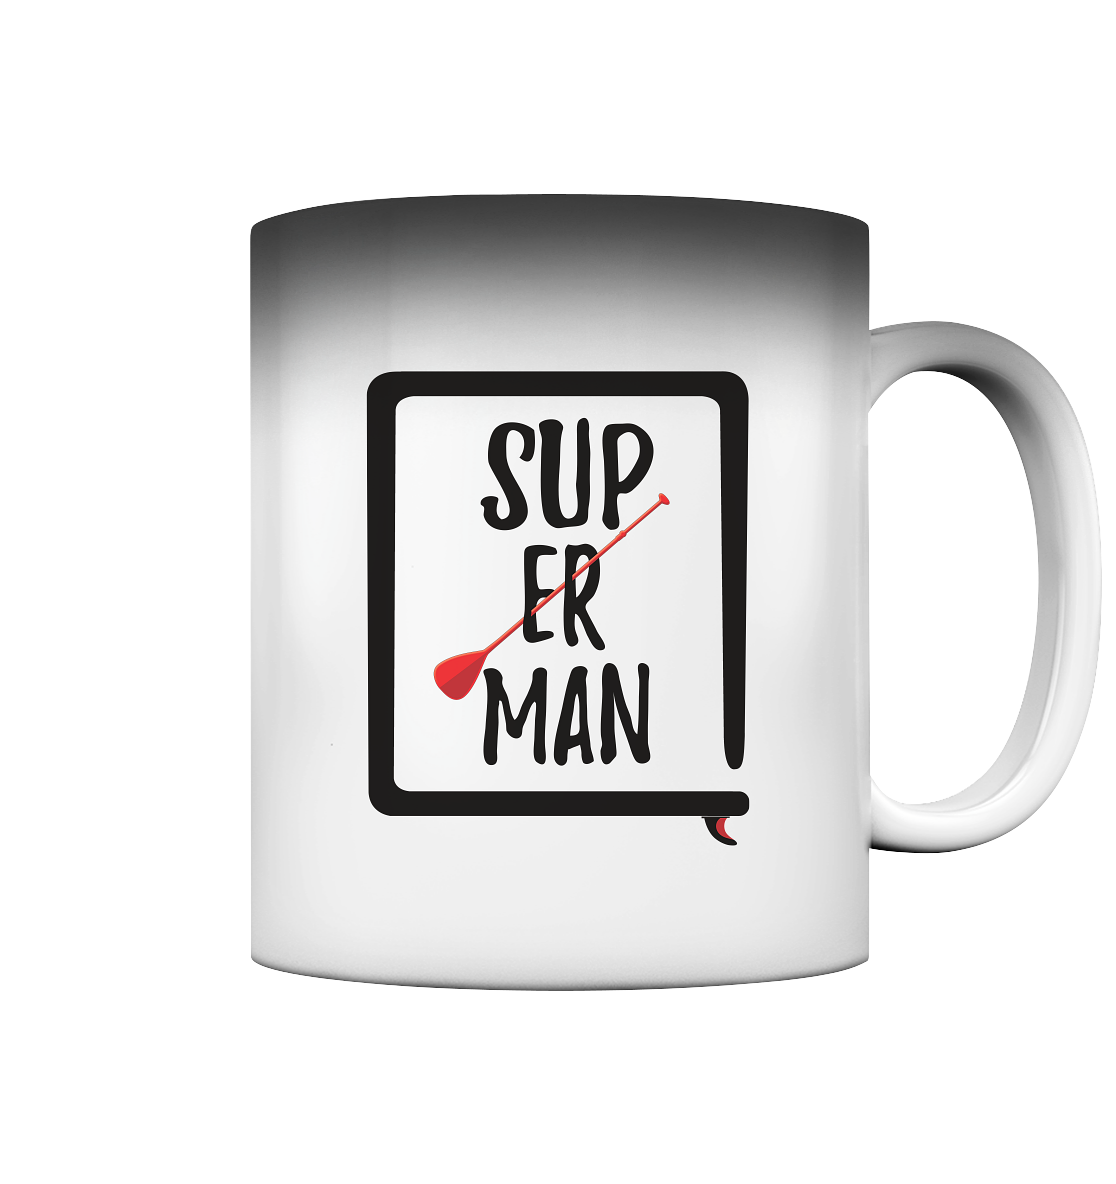 SUP ER MAN  - Magic Mug